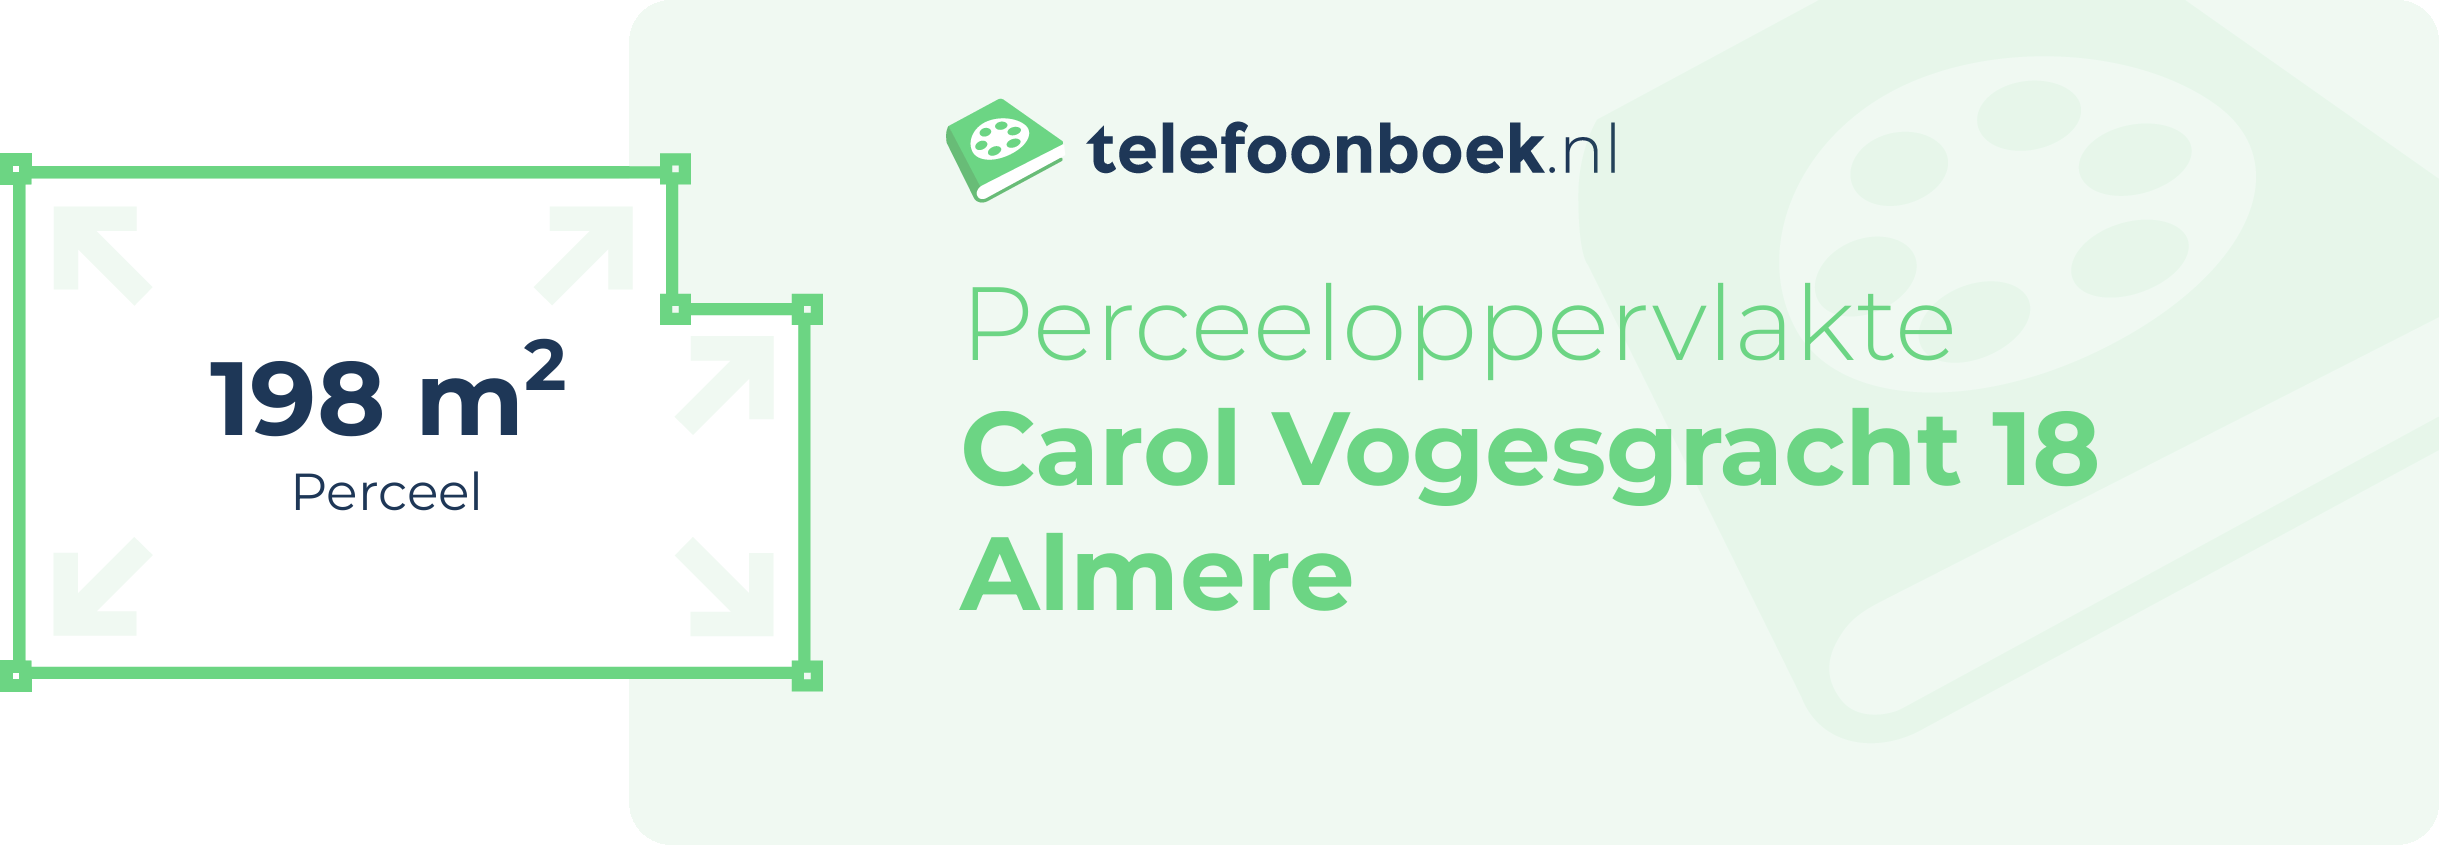 Perceeloppervlakte Carol Vogesgracht 18 Almere